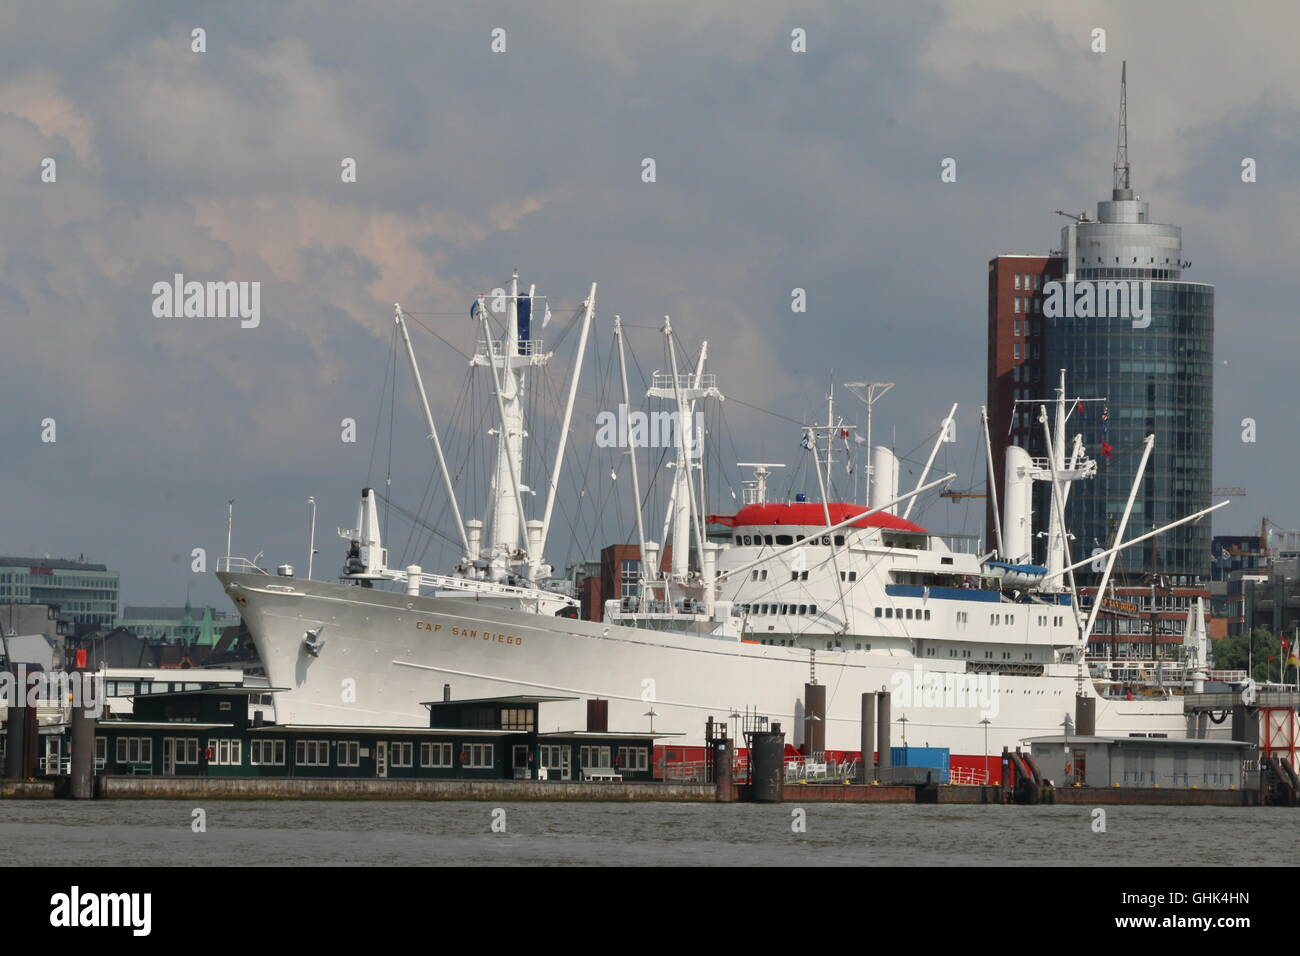 Museum ship Cap San Diego in Hamburg, Germany Stock Photo